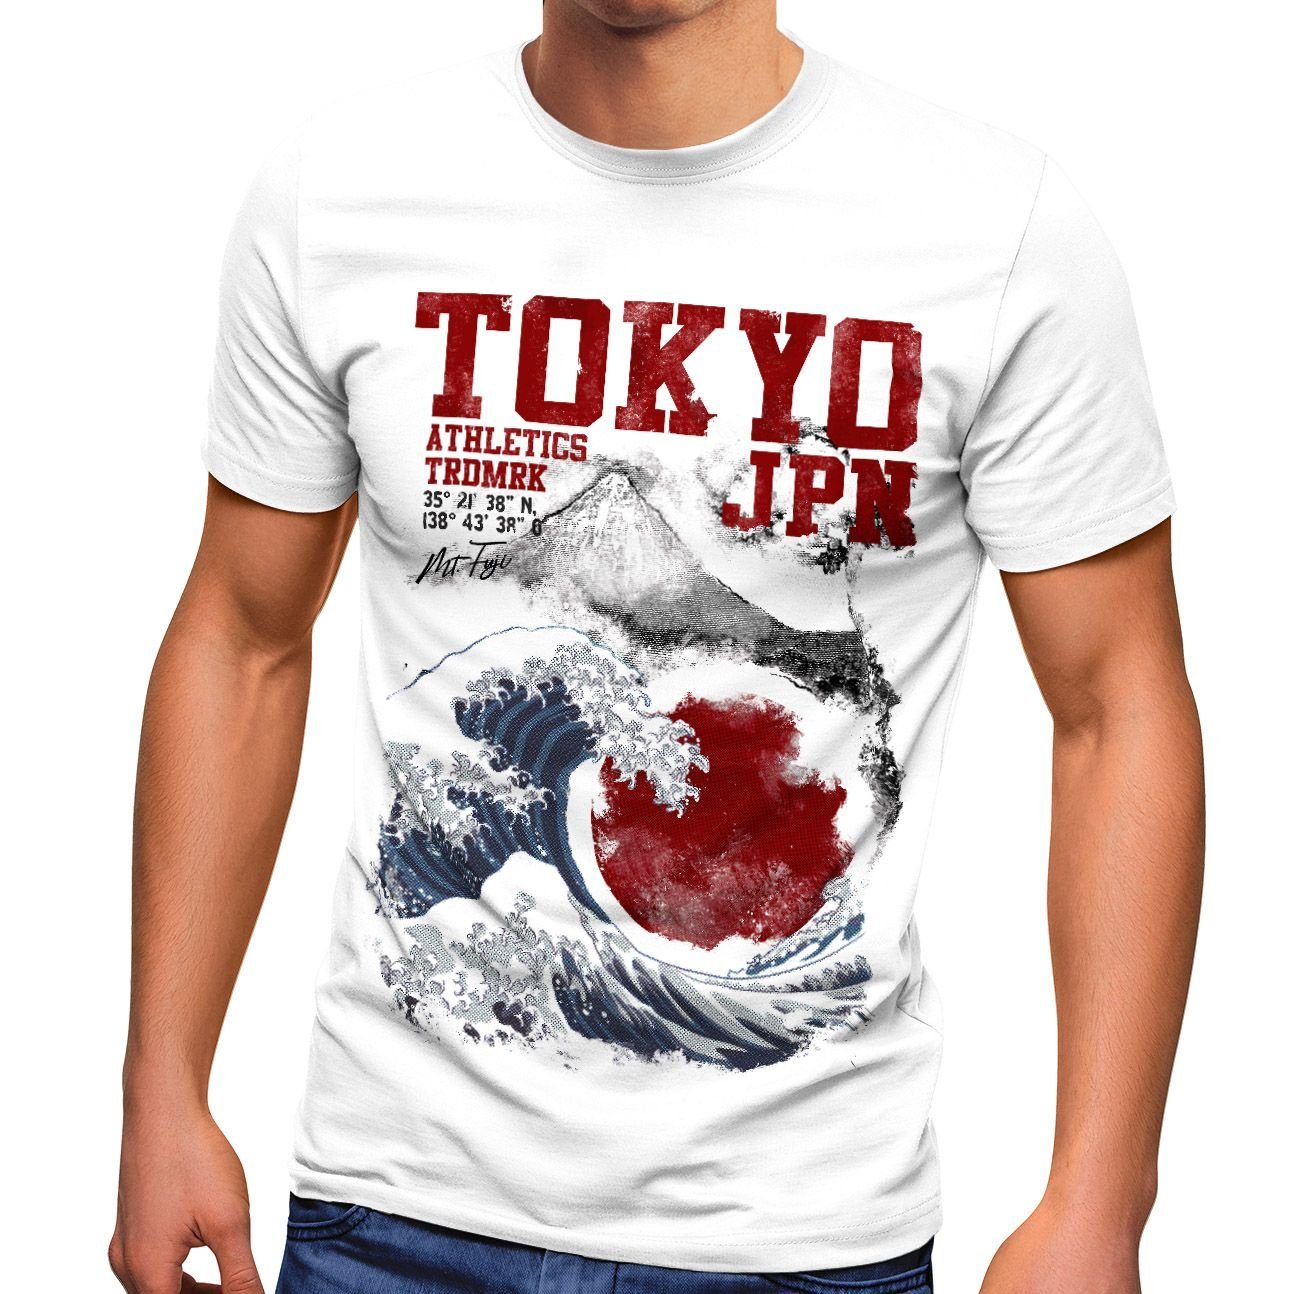 Neverless Print-Shirt Herren T-Shirt Tokyo Japan Style Fuji Welle Big Wafe Fashion Streetstyle Neverless® mit Print